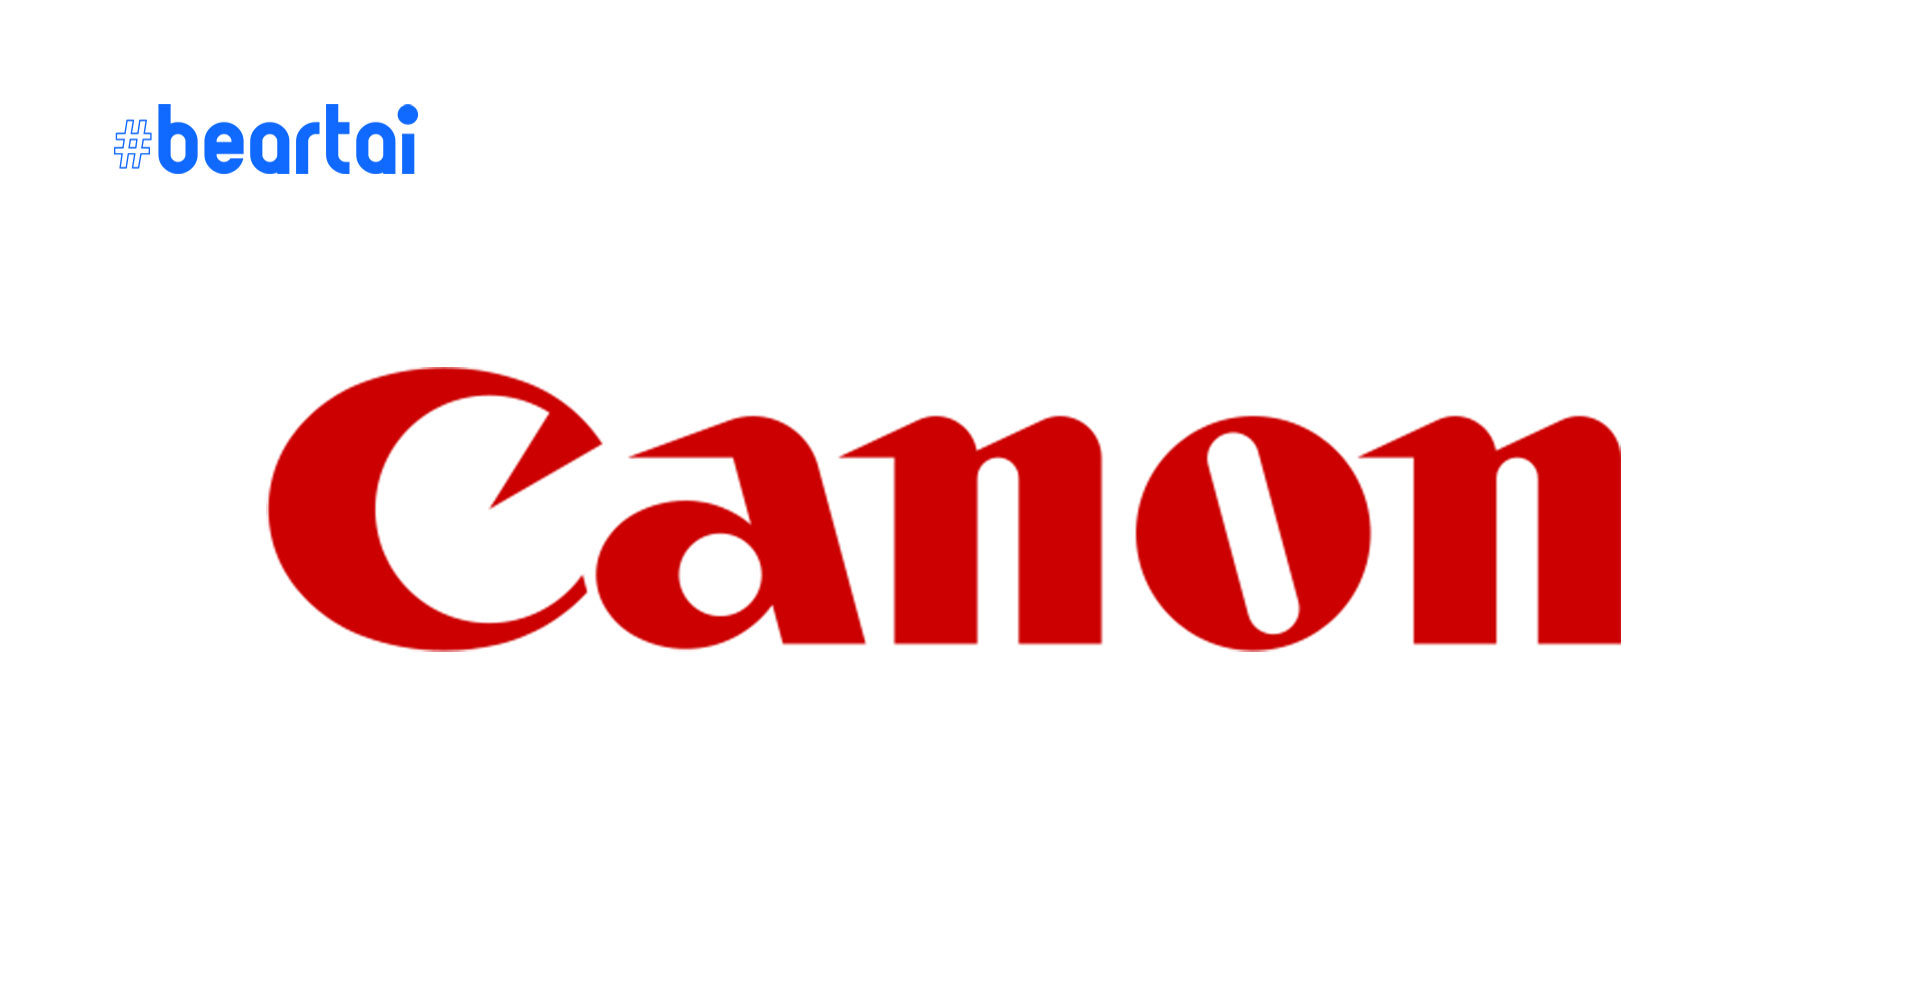 Canon ออกแถลงการสยบข่าวลือ! จะไม่มีการเลื่อนกำหนดการจัดส่งกล้อง EOS R5 อย่างแน่นอน